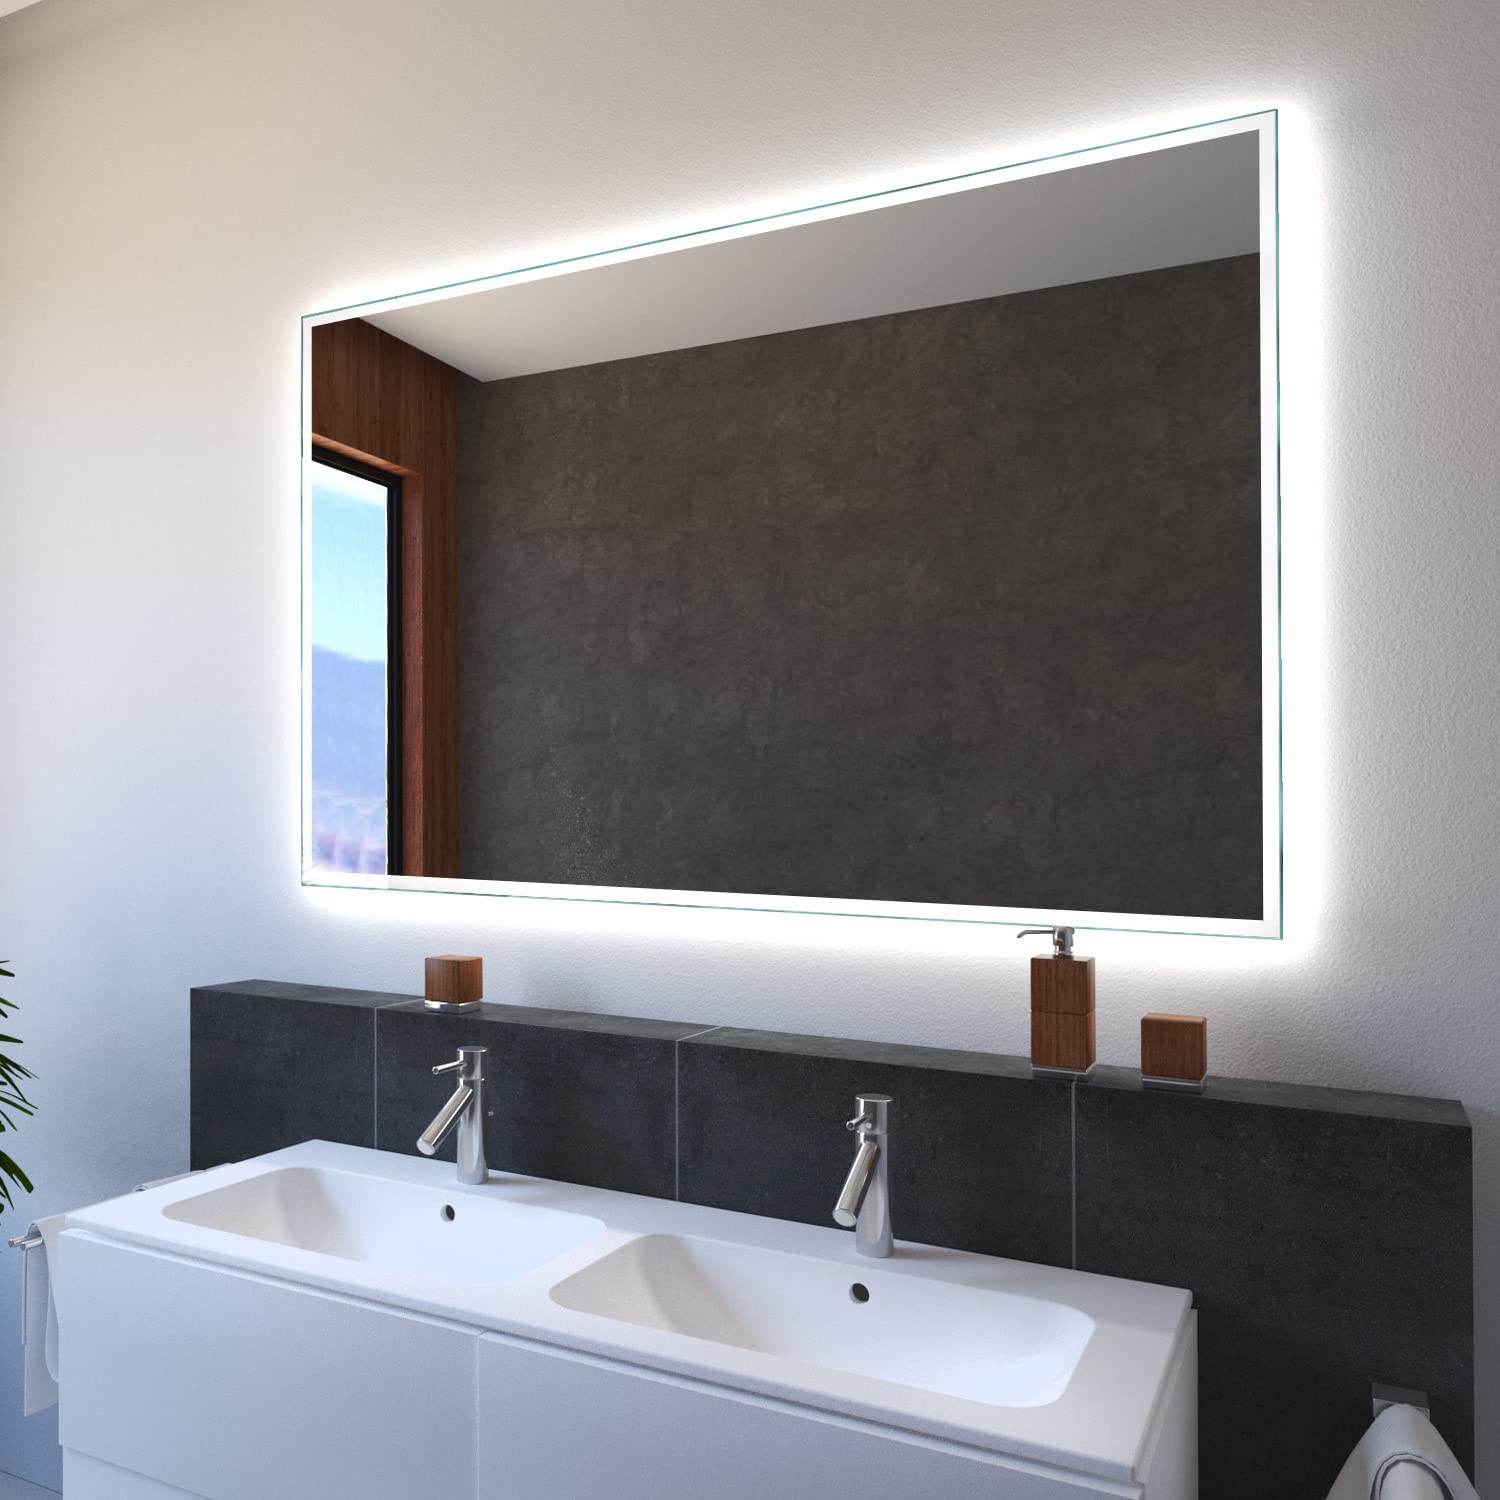 SARAR Wandspiegel mit schmaler rundum LED-Beleuchtung 110x60cm Made in Germany Designo MA4111 Badspiegel Spiegel mit Beleuchtung Badezimmerspiegel nach-auf Maß